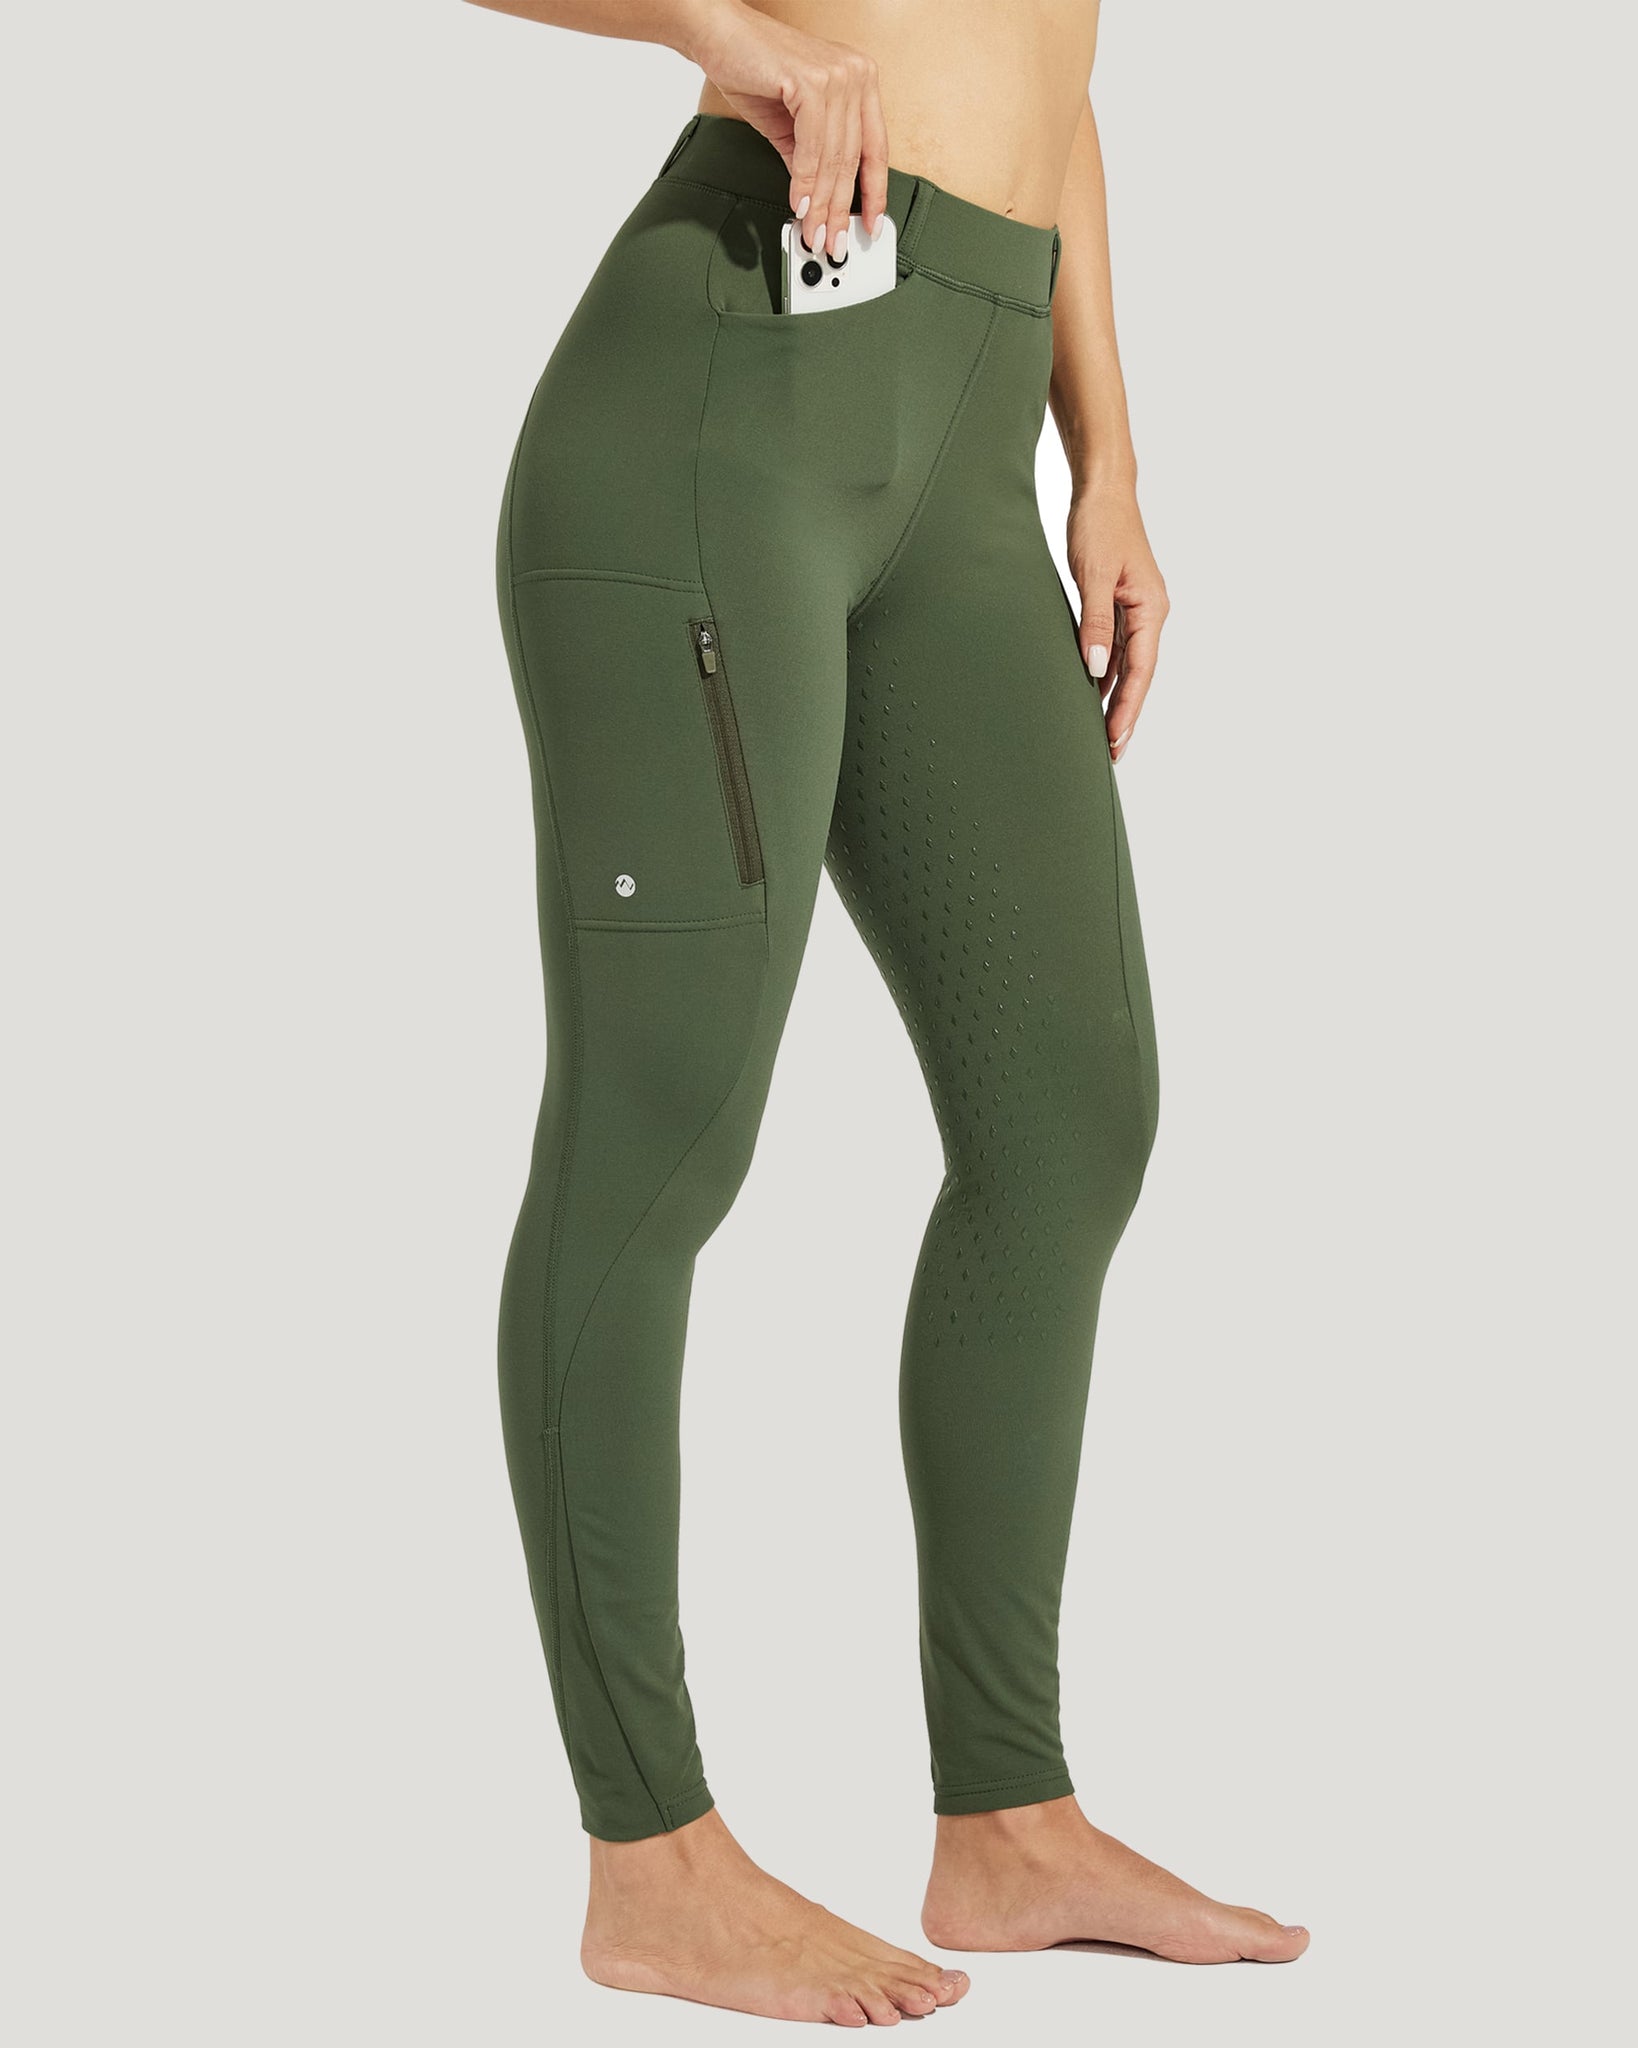 Women's Fleece Riding Pants_Green_model1